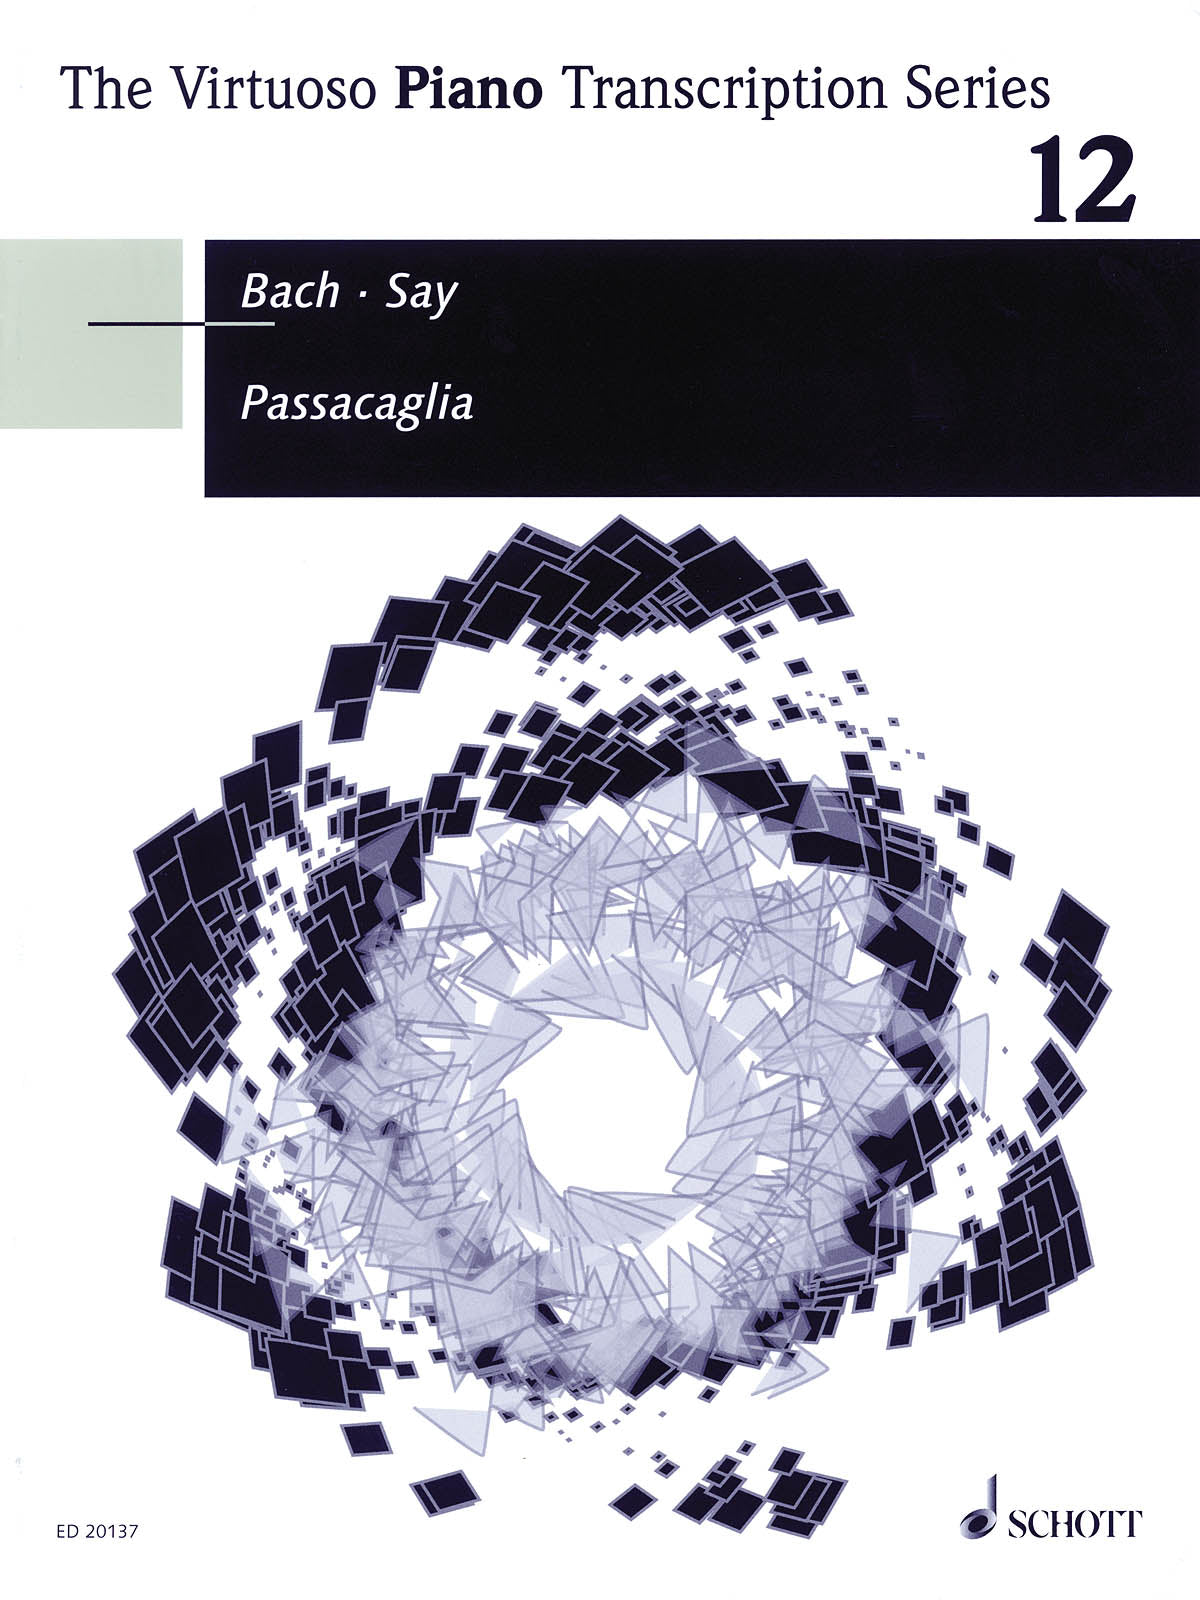 Bach-Say: Passacaglia, Op. 15